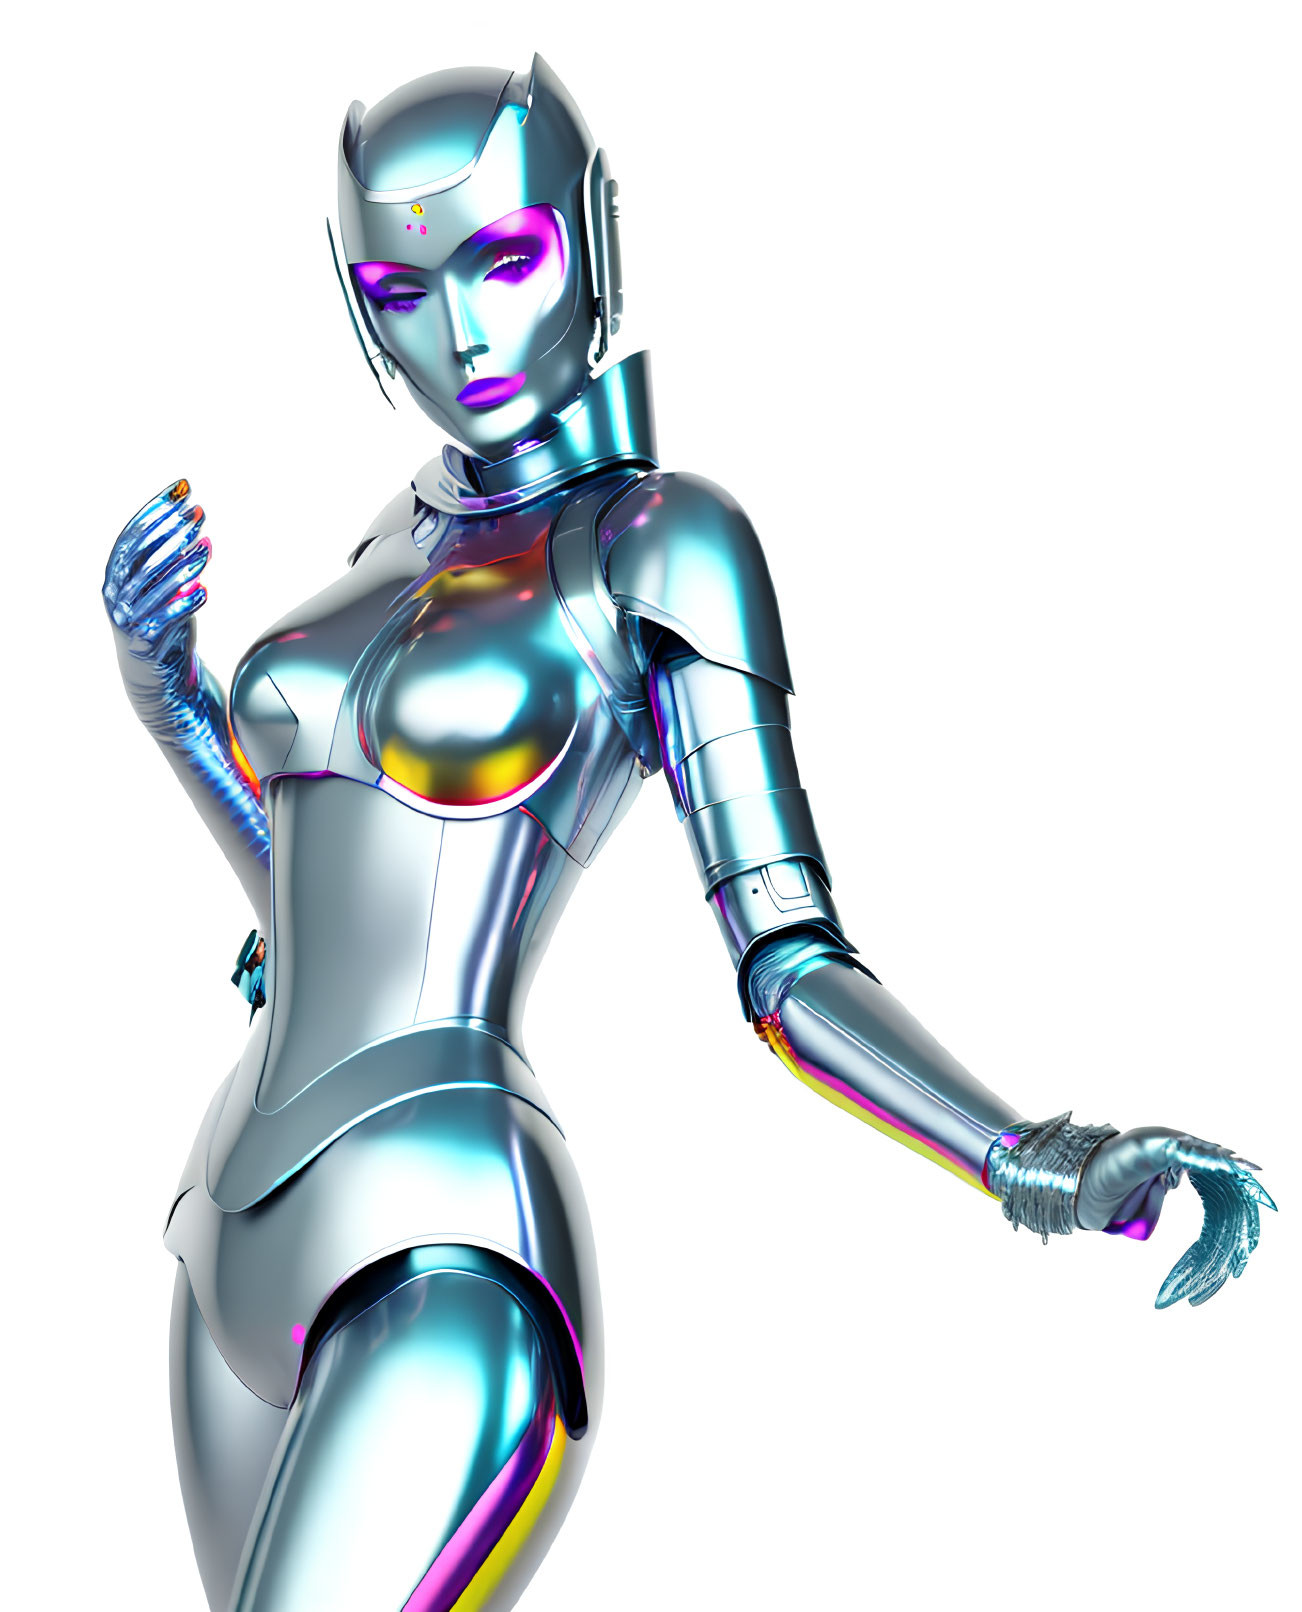 Iridescent metallic humanoid robot with feminine form on white backdrop